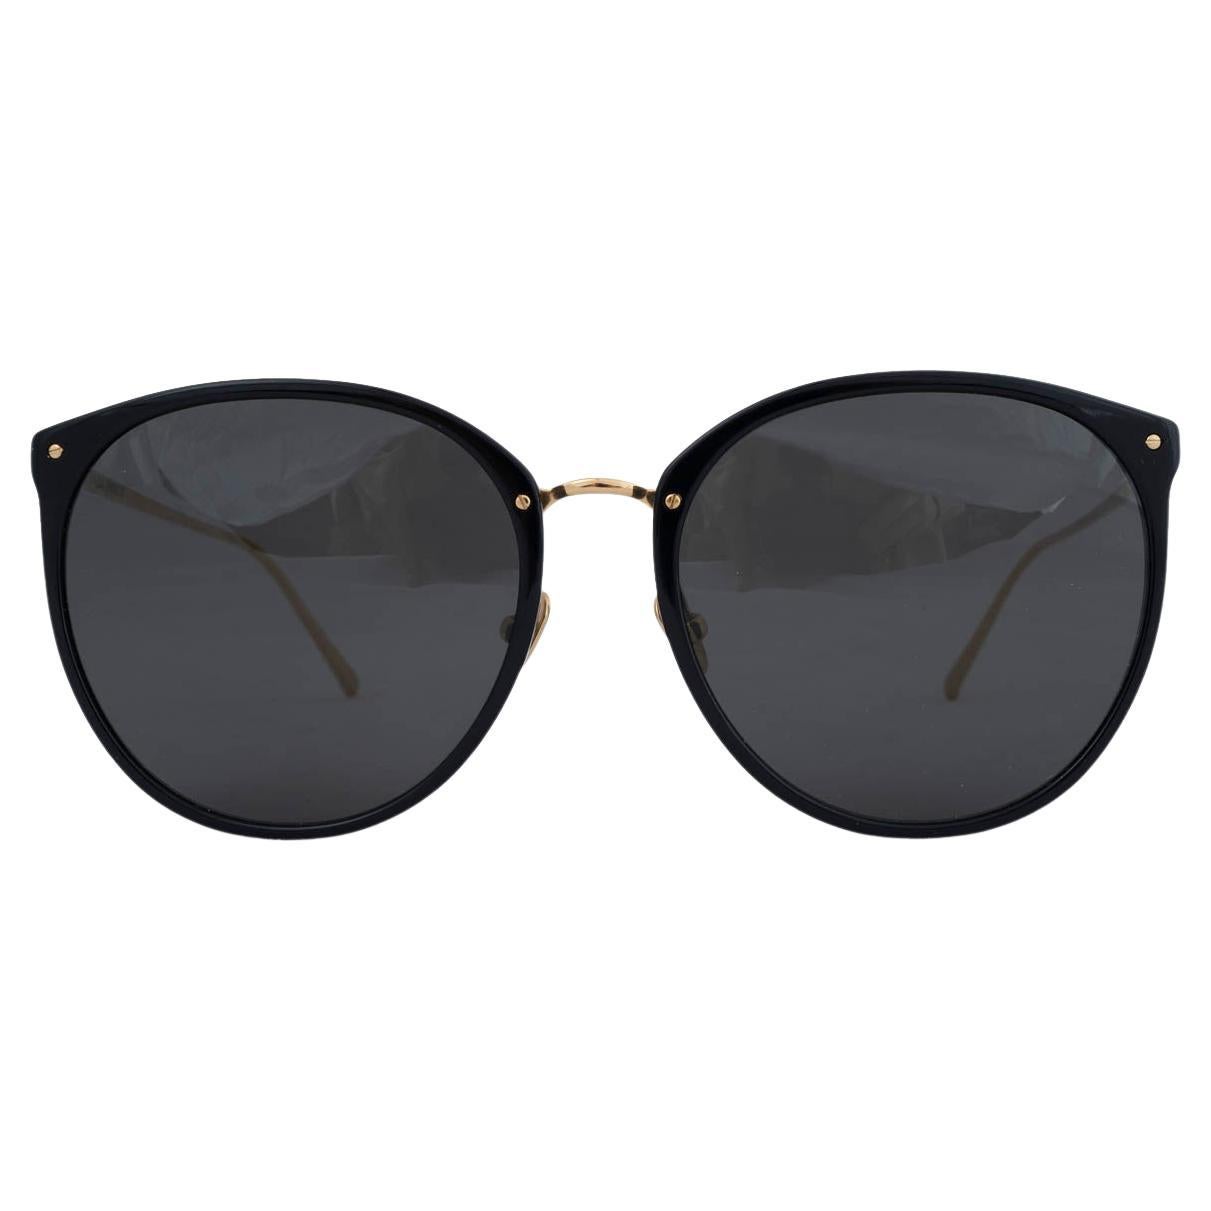 LINDA FARROW black THE KING oval Sunglasses 5965 For Sale